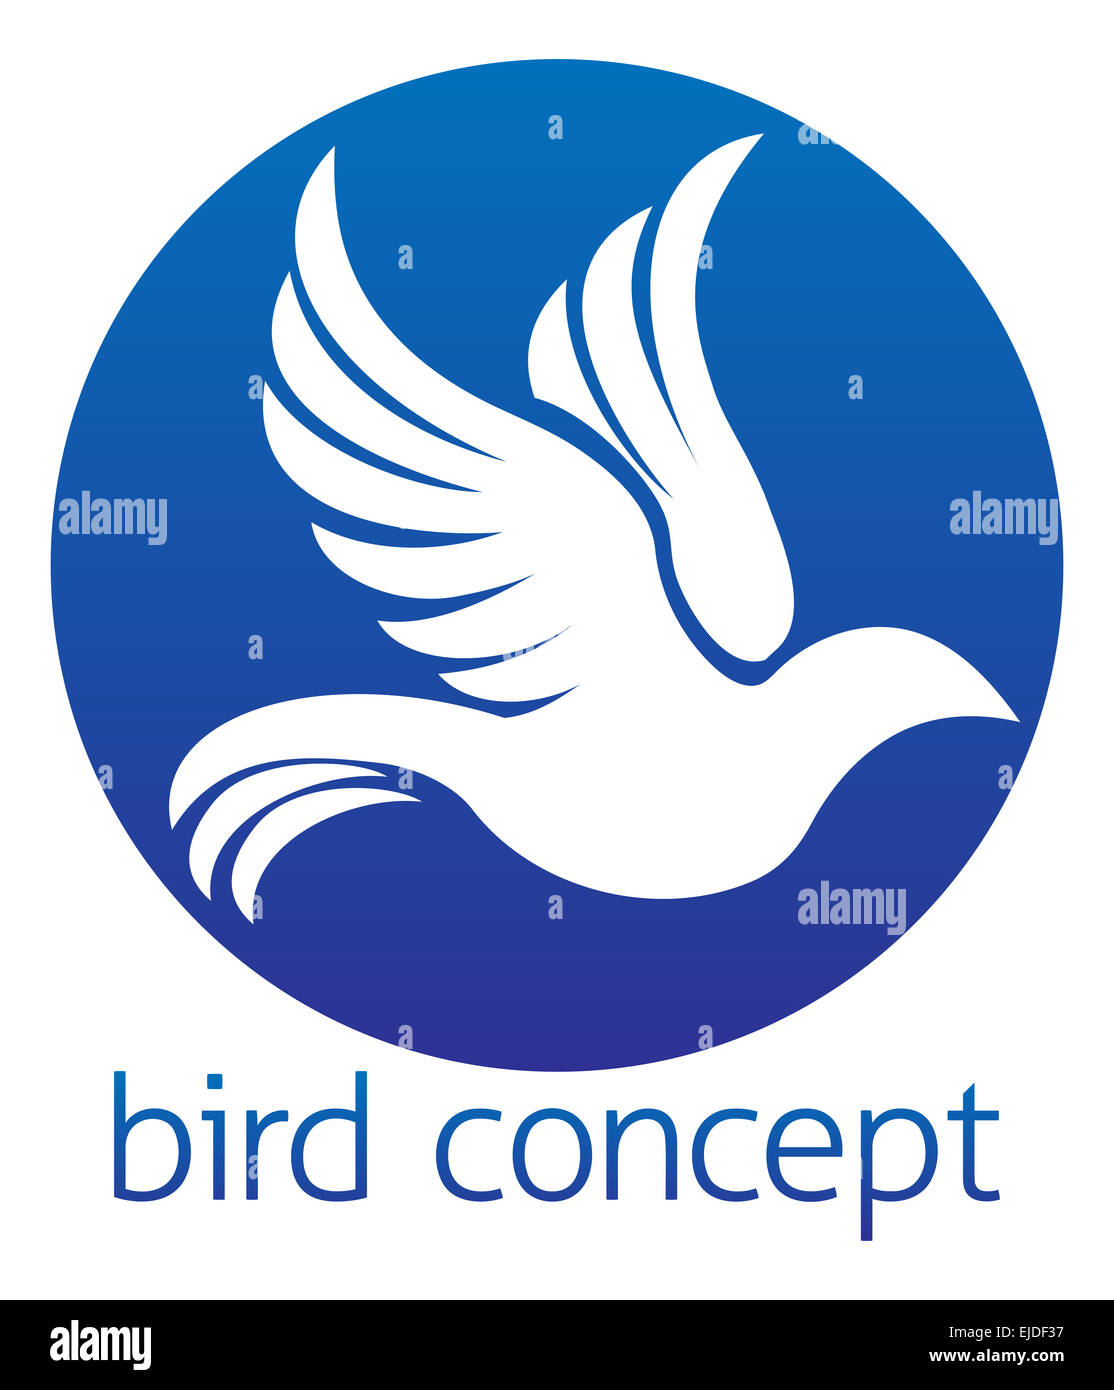 An abstract illustration of a white bird or dove circle concept design Stock Photo